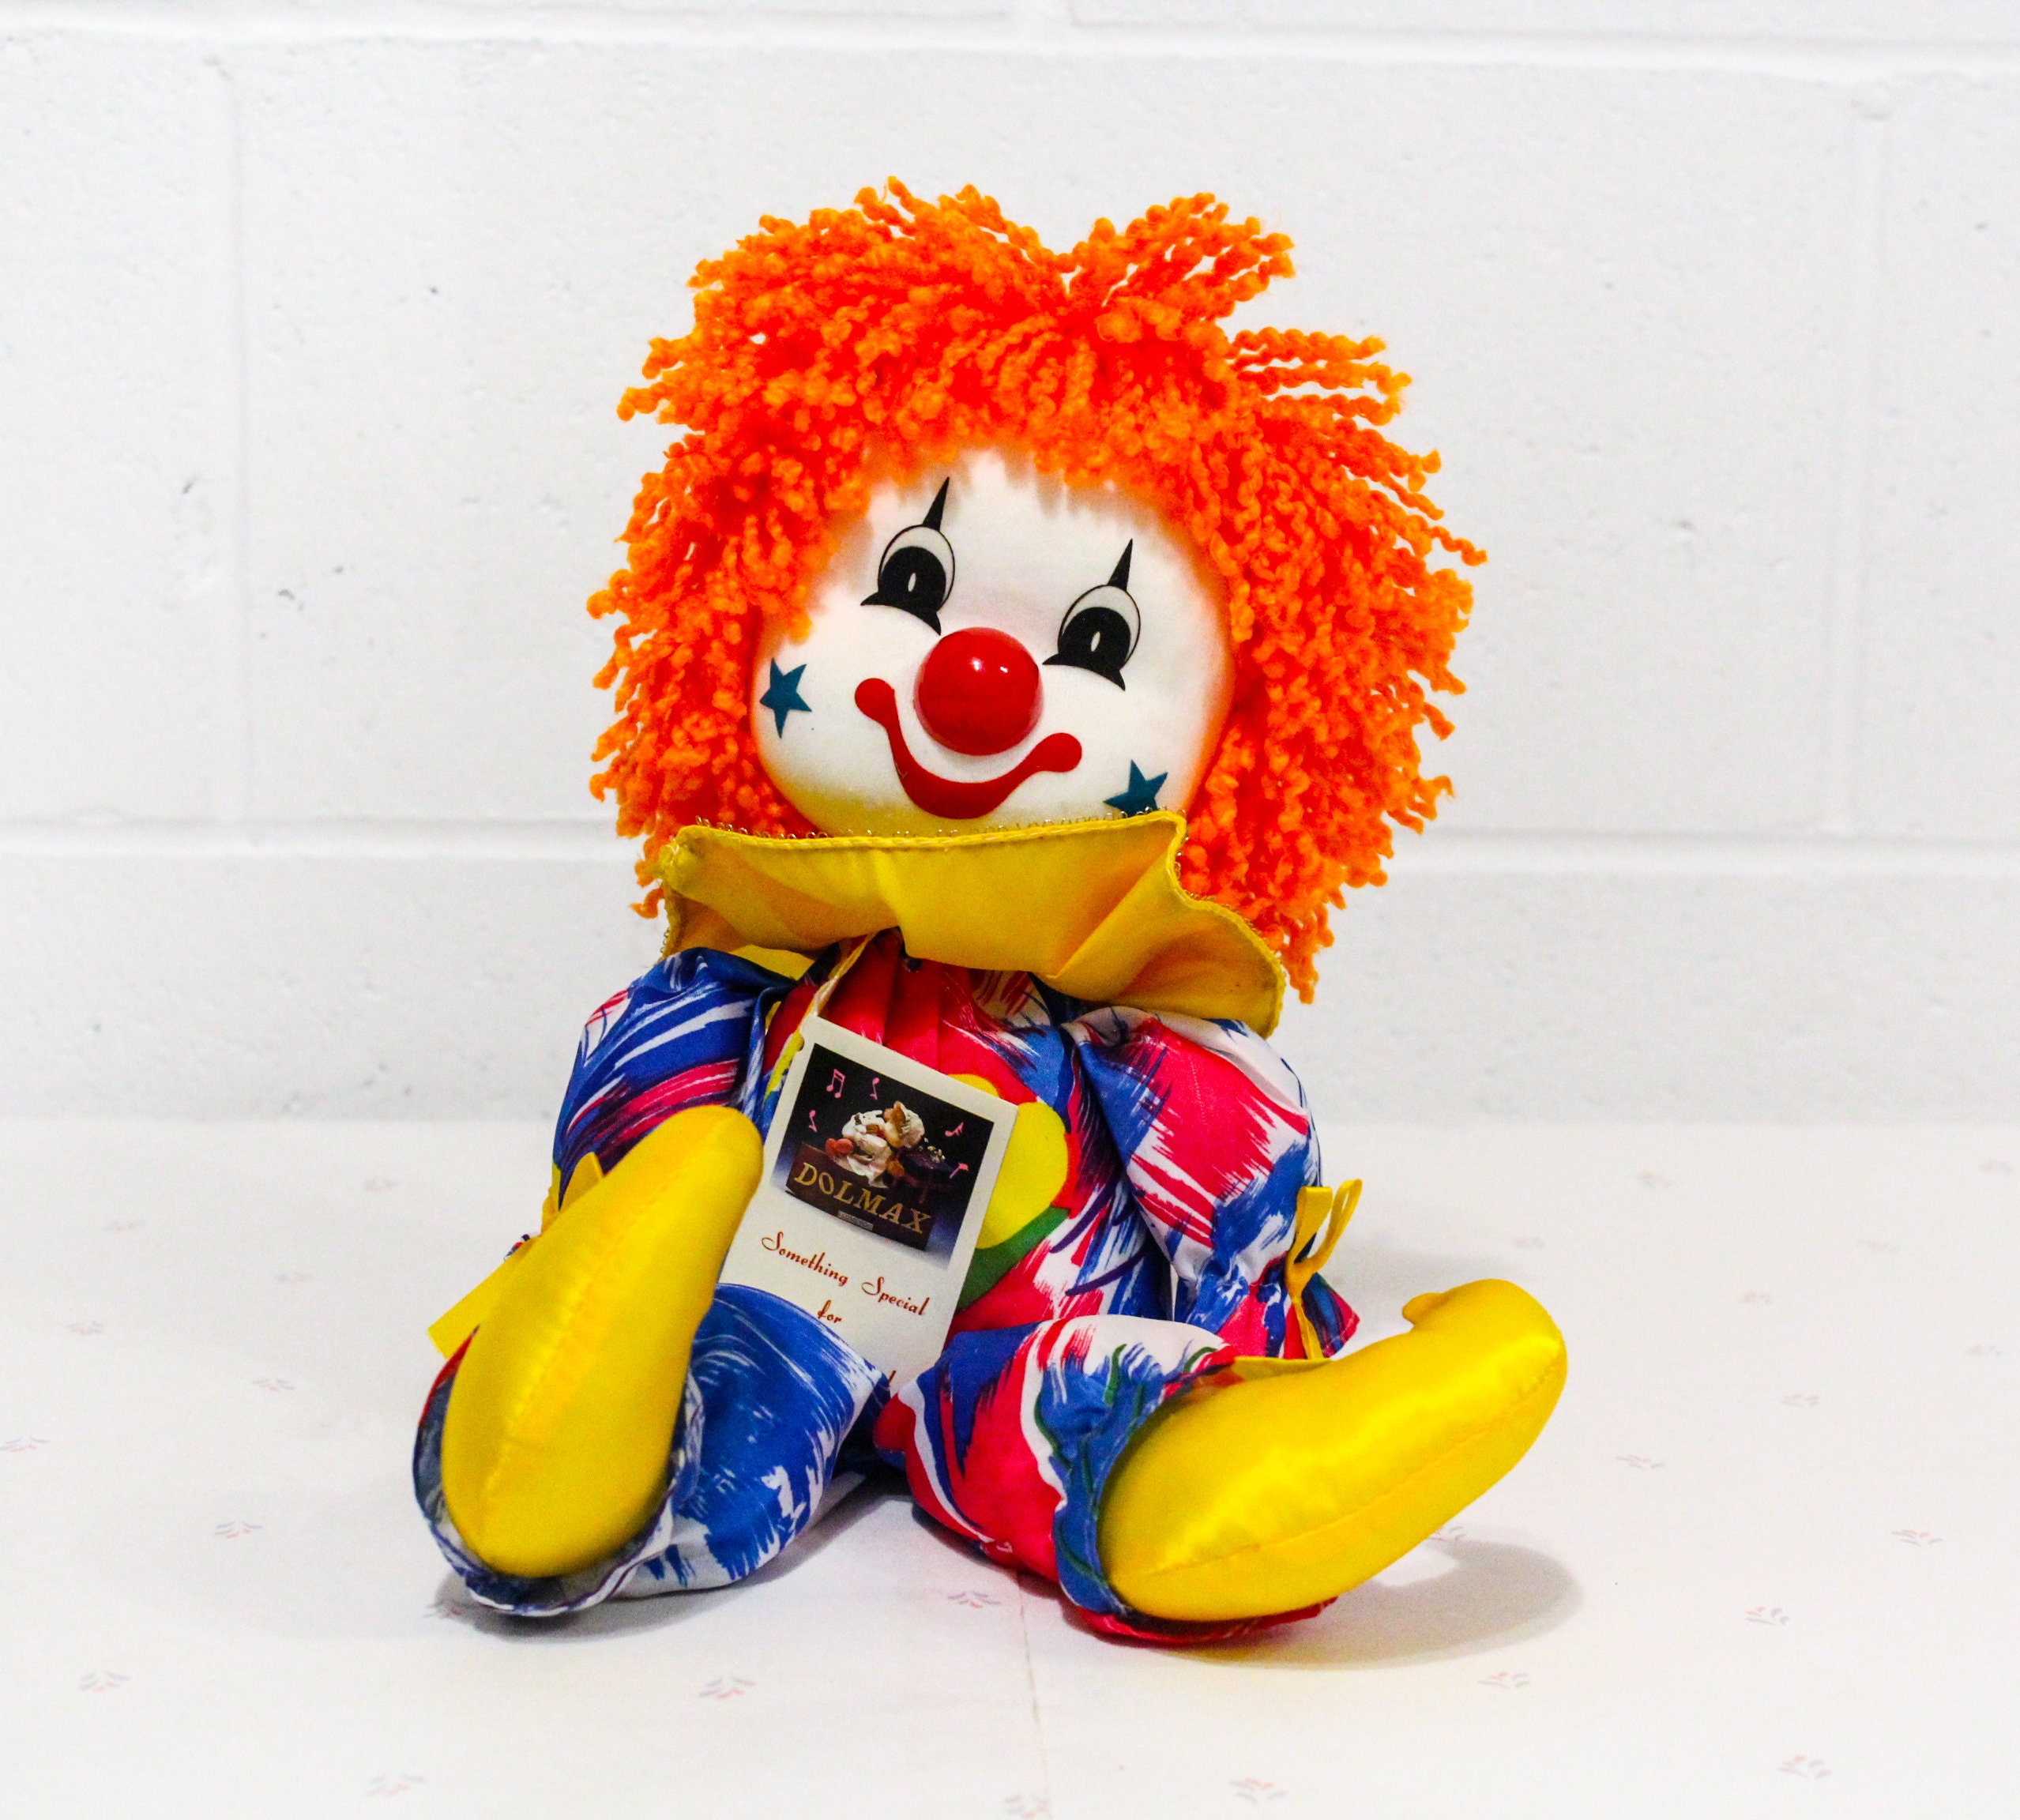 Музыкальные клоуны. Музыкальная игрушка клоун. Игрушка клоун со смехом. Клоун мягкая игрушка 90-х. Кукла клоун восьмидесятых.